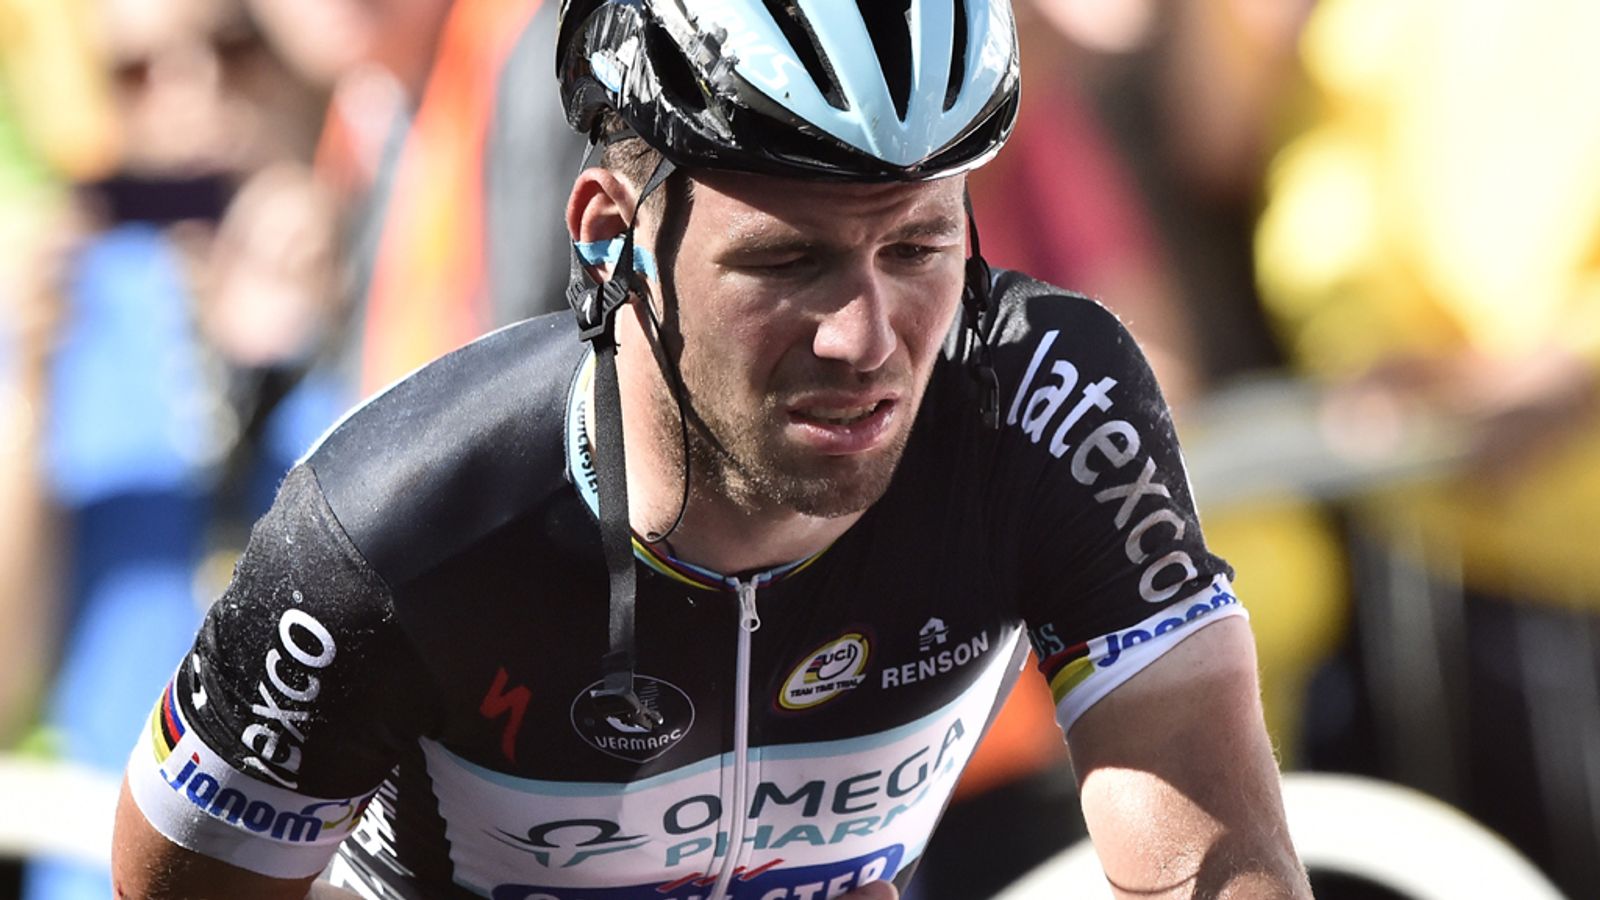 Tour de France: Mark Cavendish crashes heavily as Marcel Kittel wins ...